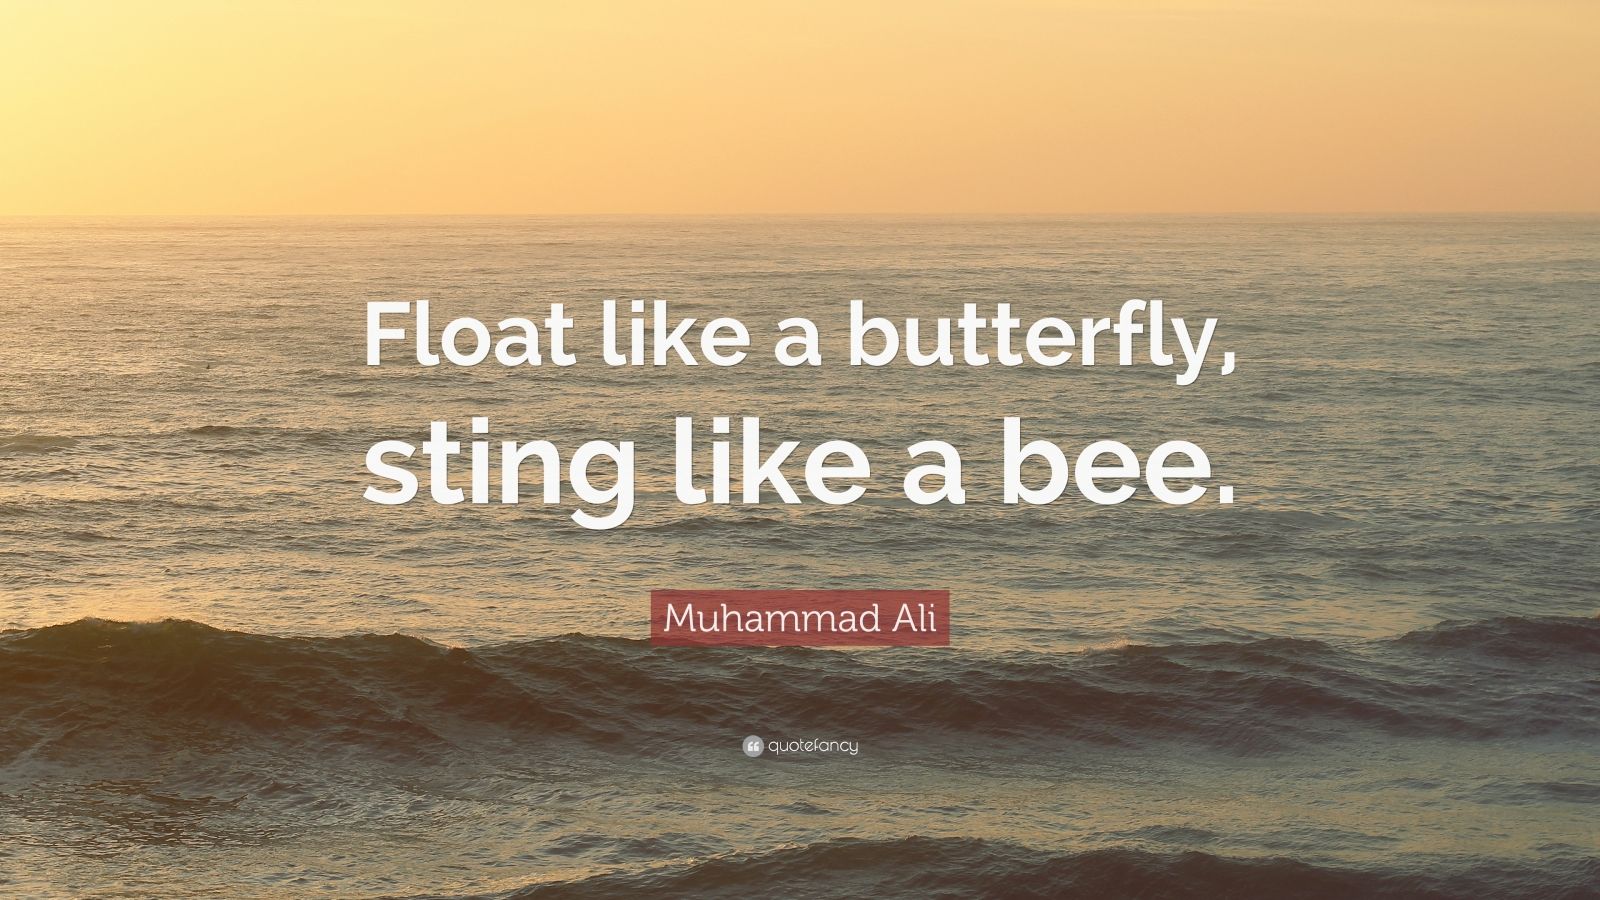 float like a butterfly sting like a bee